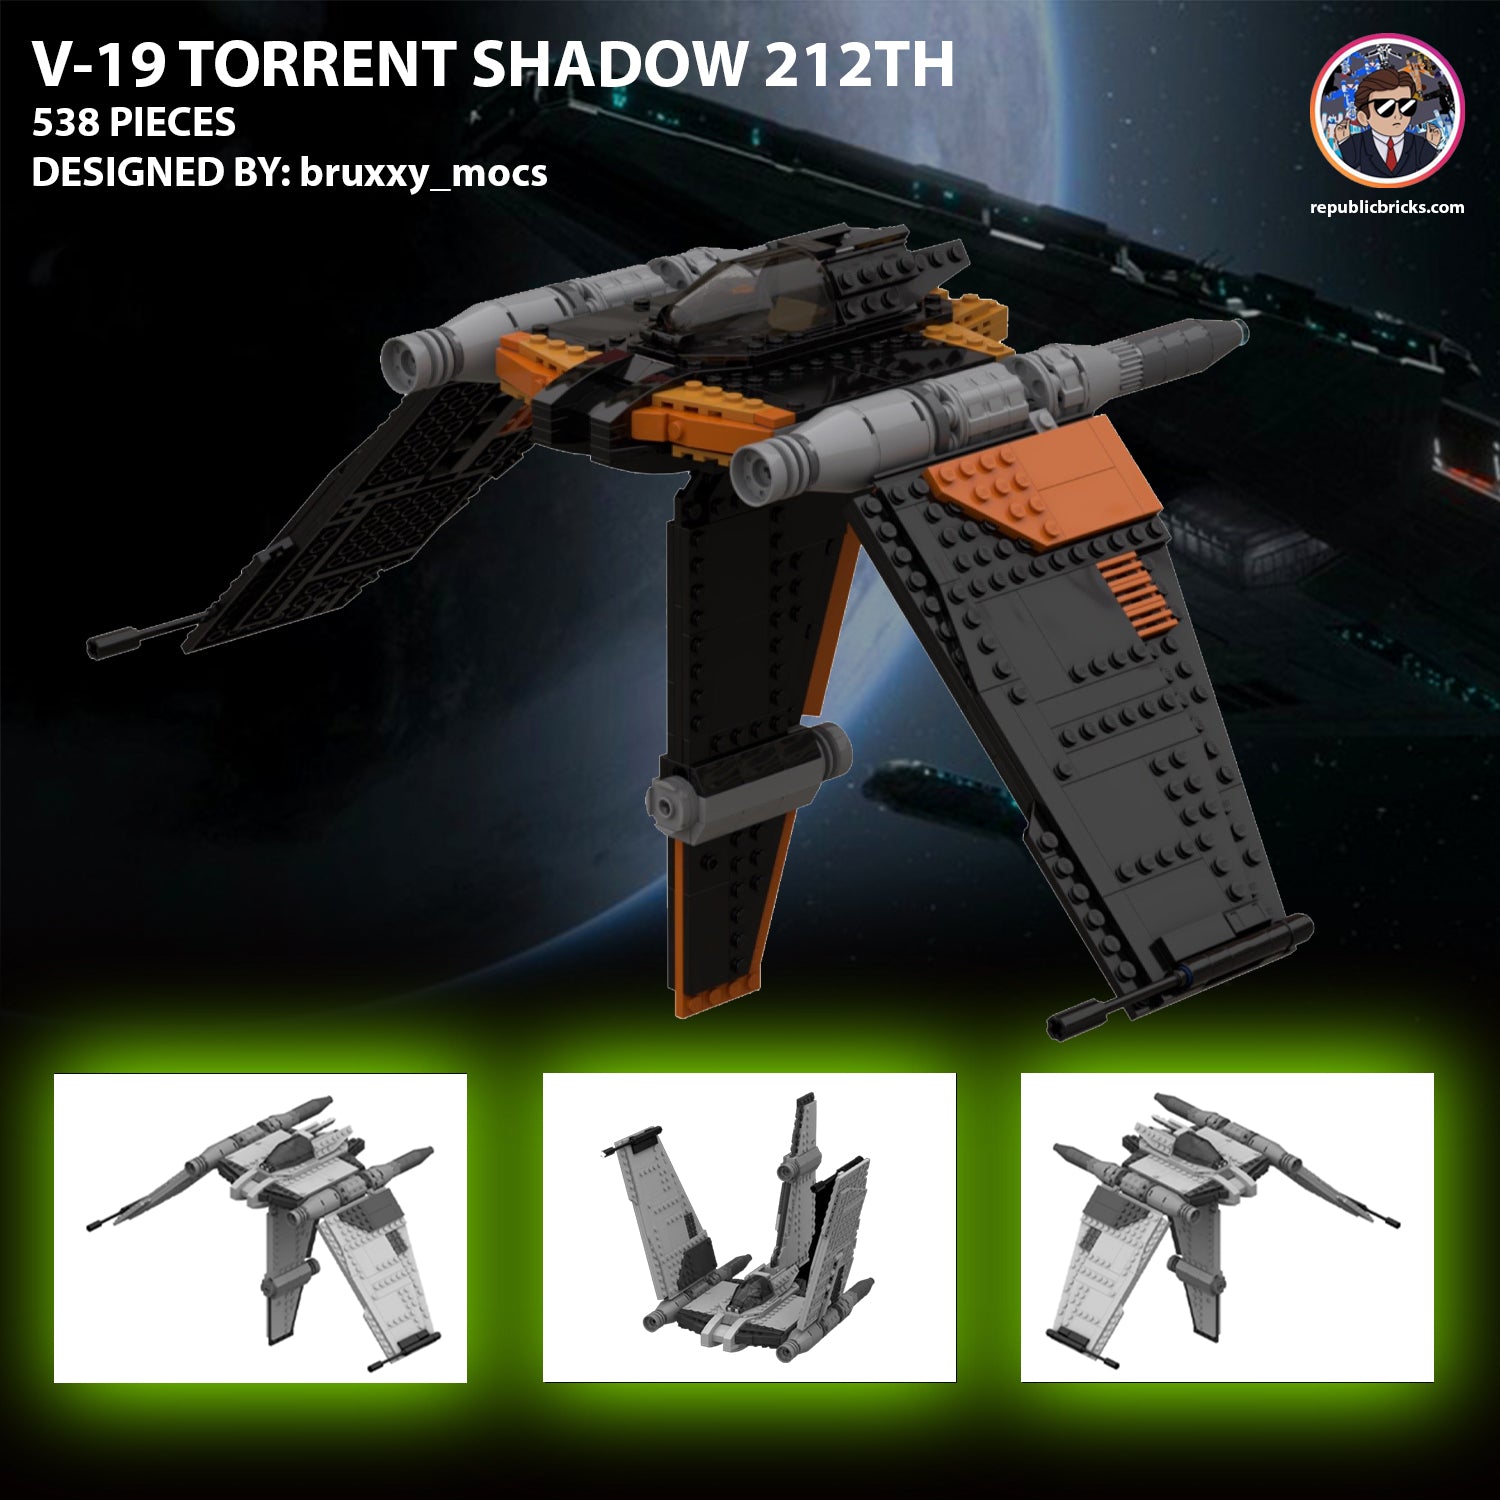 SHADOW 212TH V-19 TORRENT